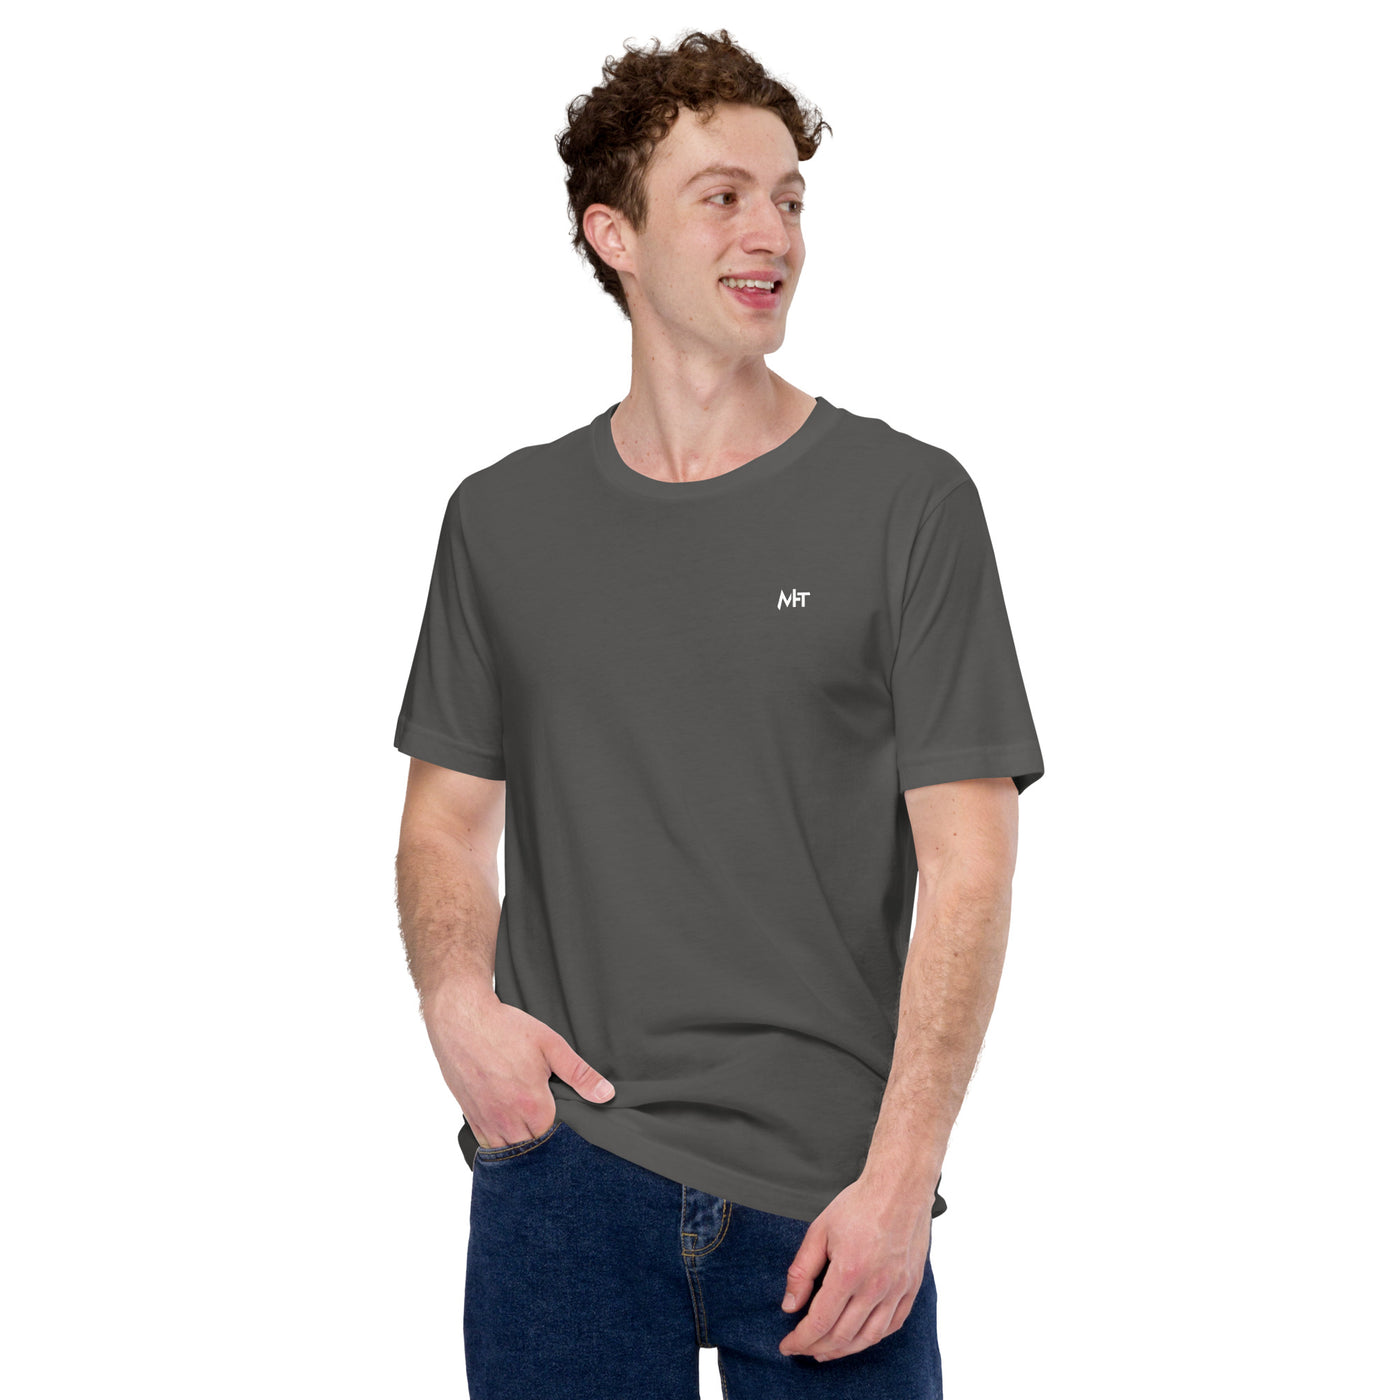 Doge the Meme, the Myth, the Crypto Legend - Unisex t-shirt ( Back Print )